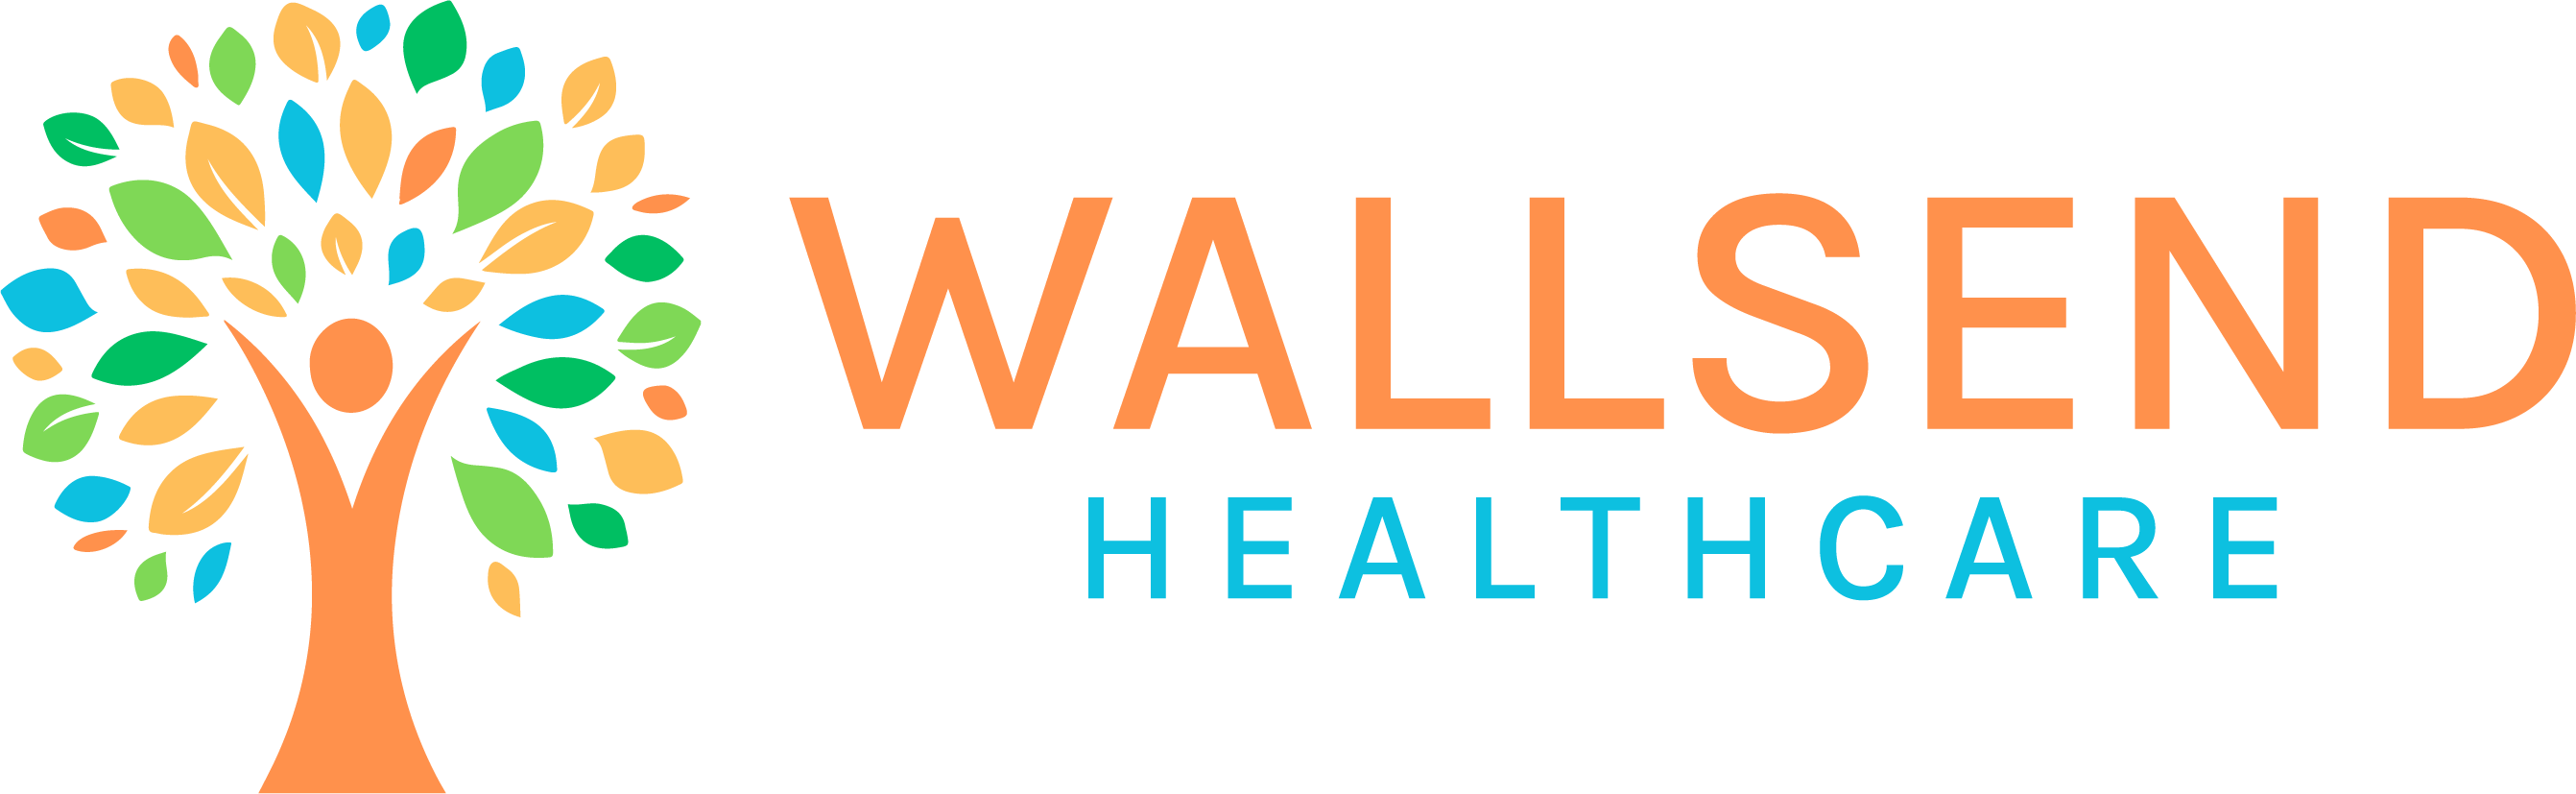 Wallsend Health Care